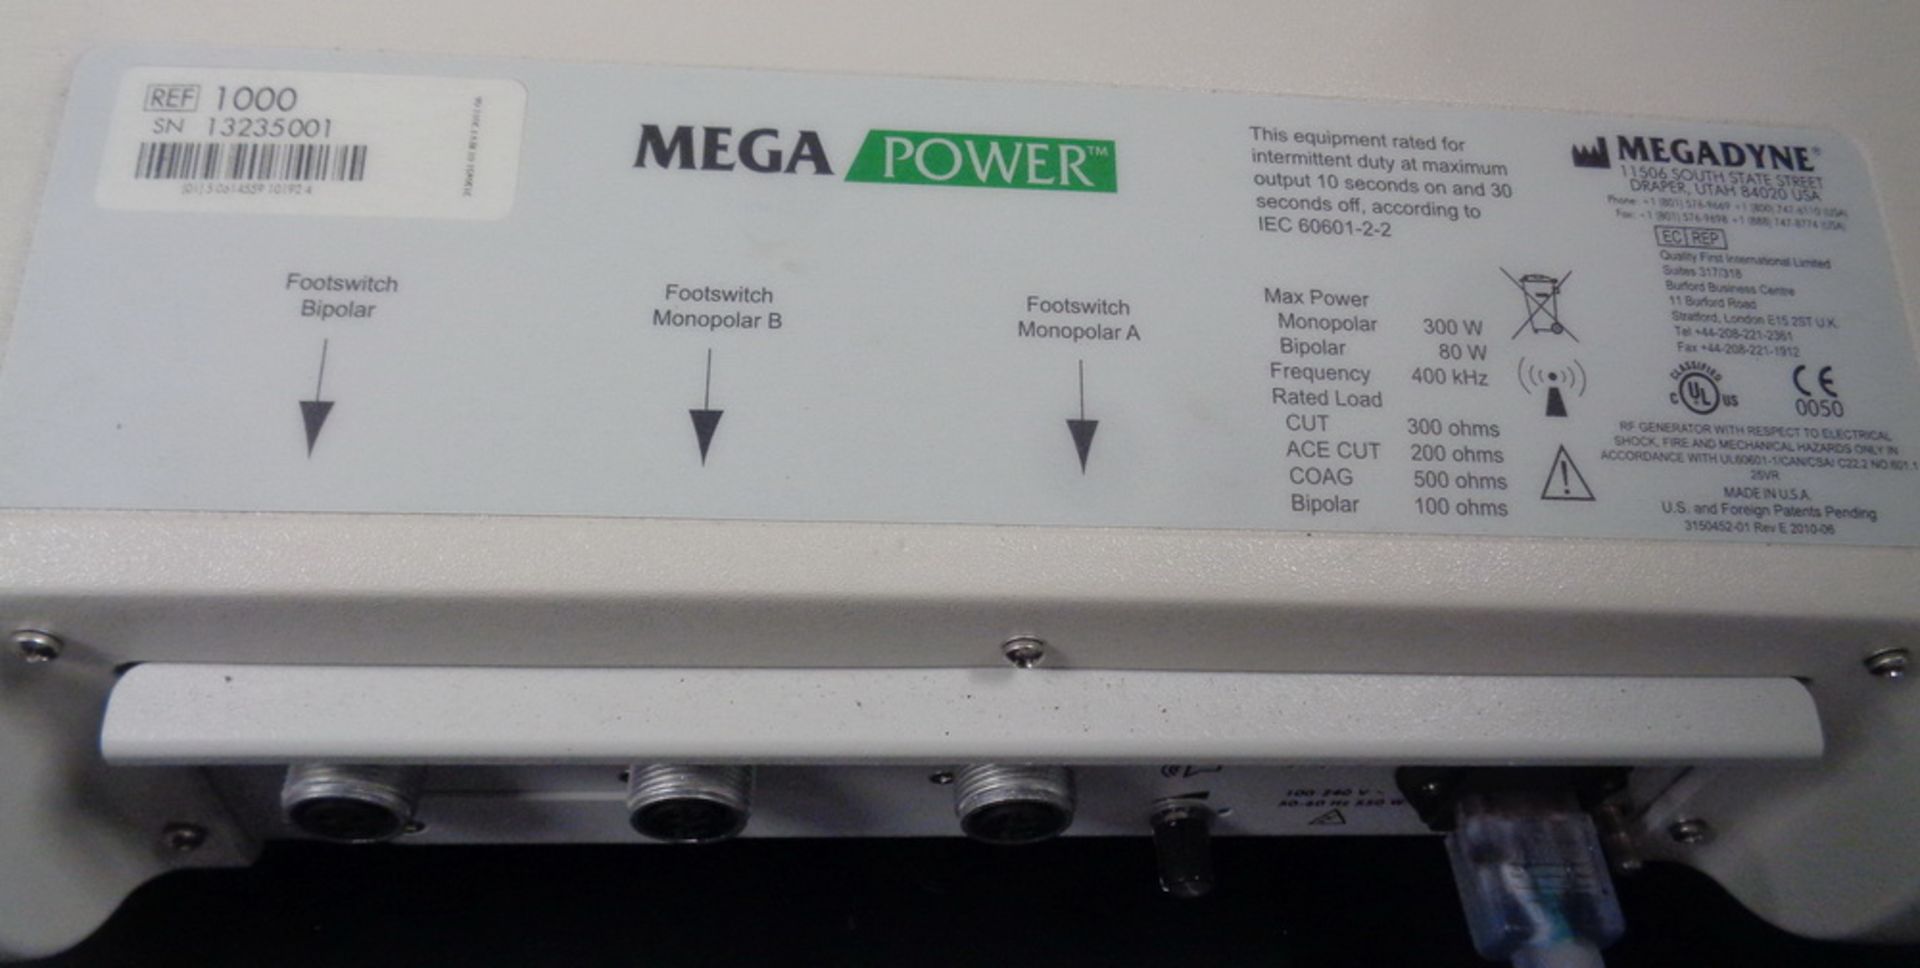 Megadyne Mega Power Electrosurgical Generator, S/N 13235001 - Image 3 of 3